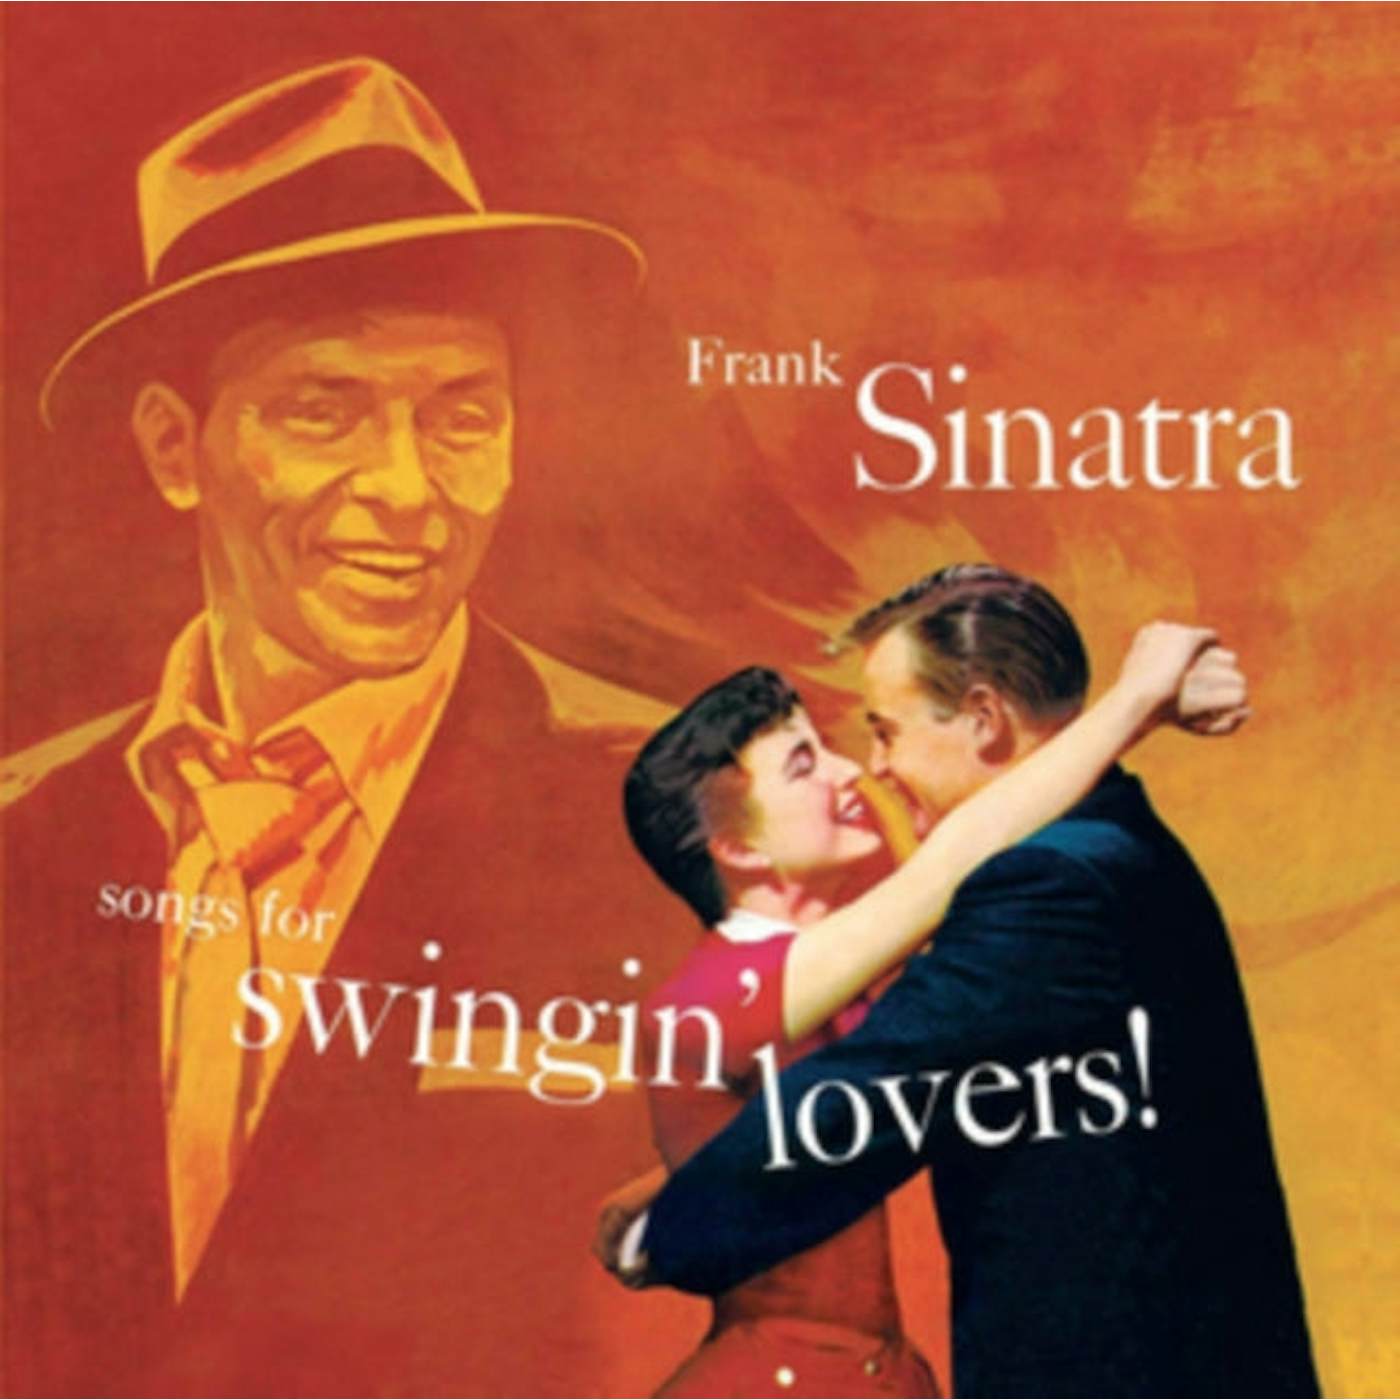 Frank Sinatra LP Vinyl Record - Songs For Swingin' Lovers! (Limited Solid Orange Vinyl)